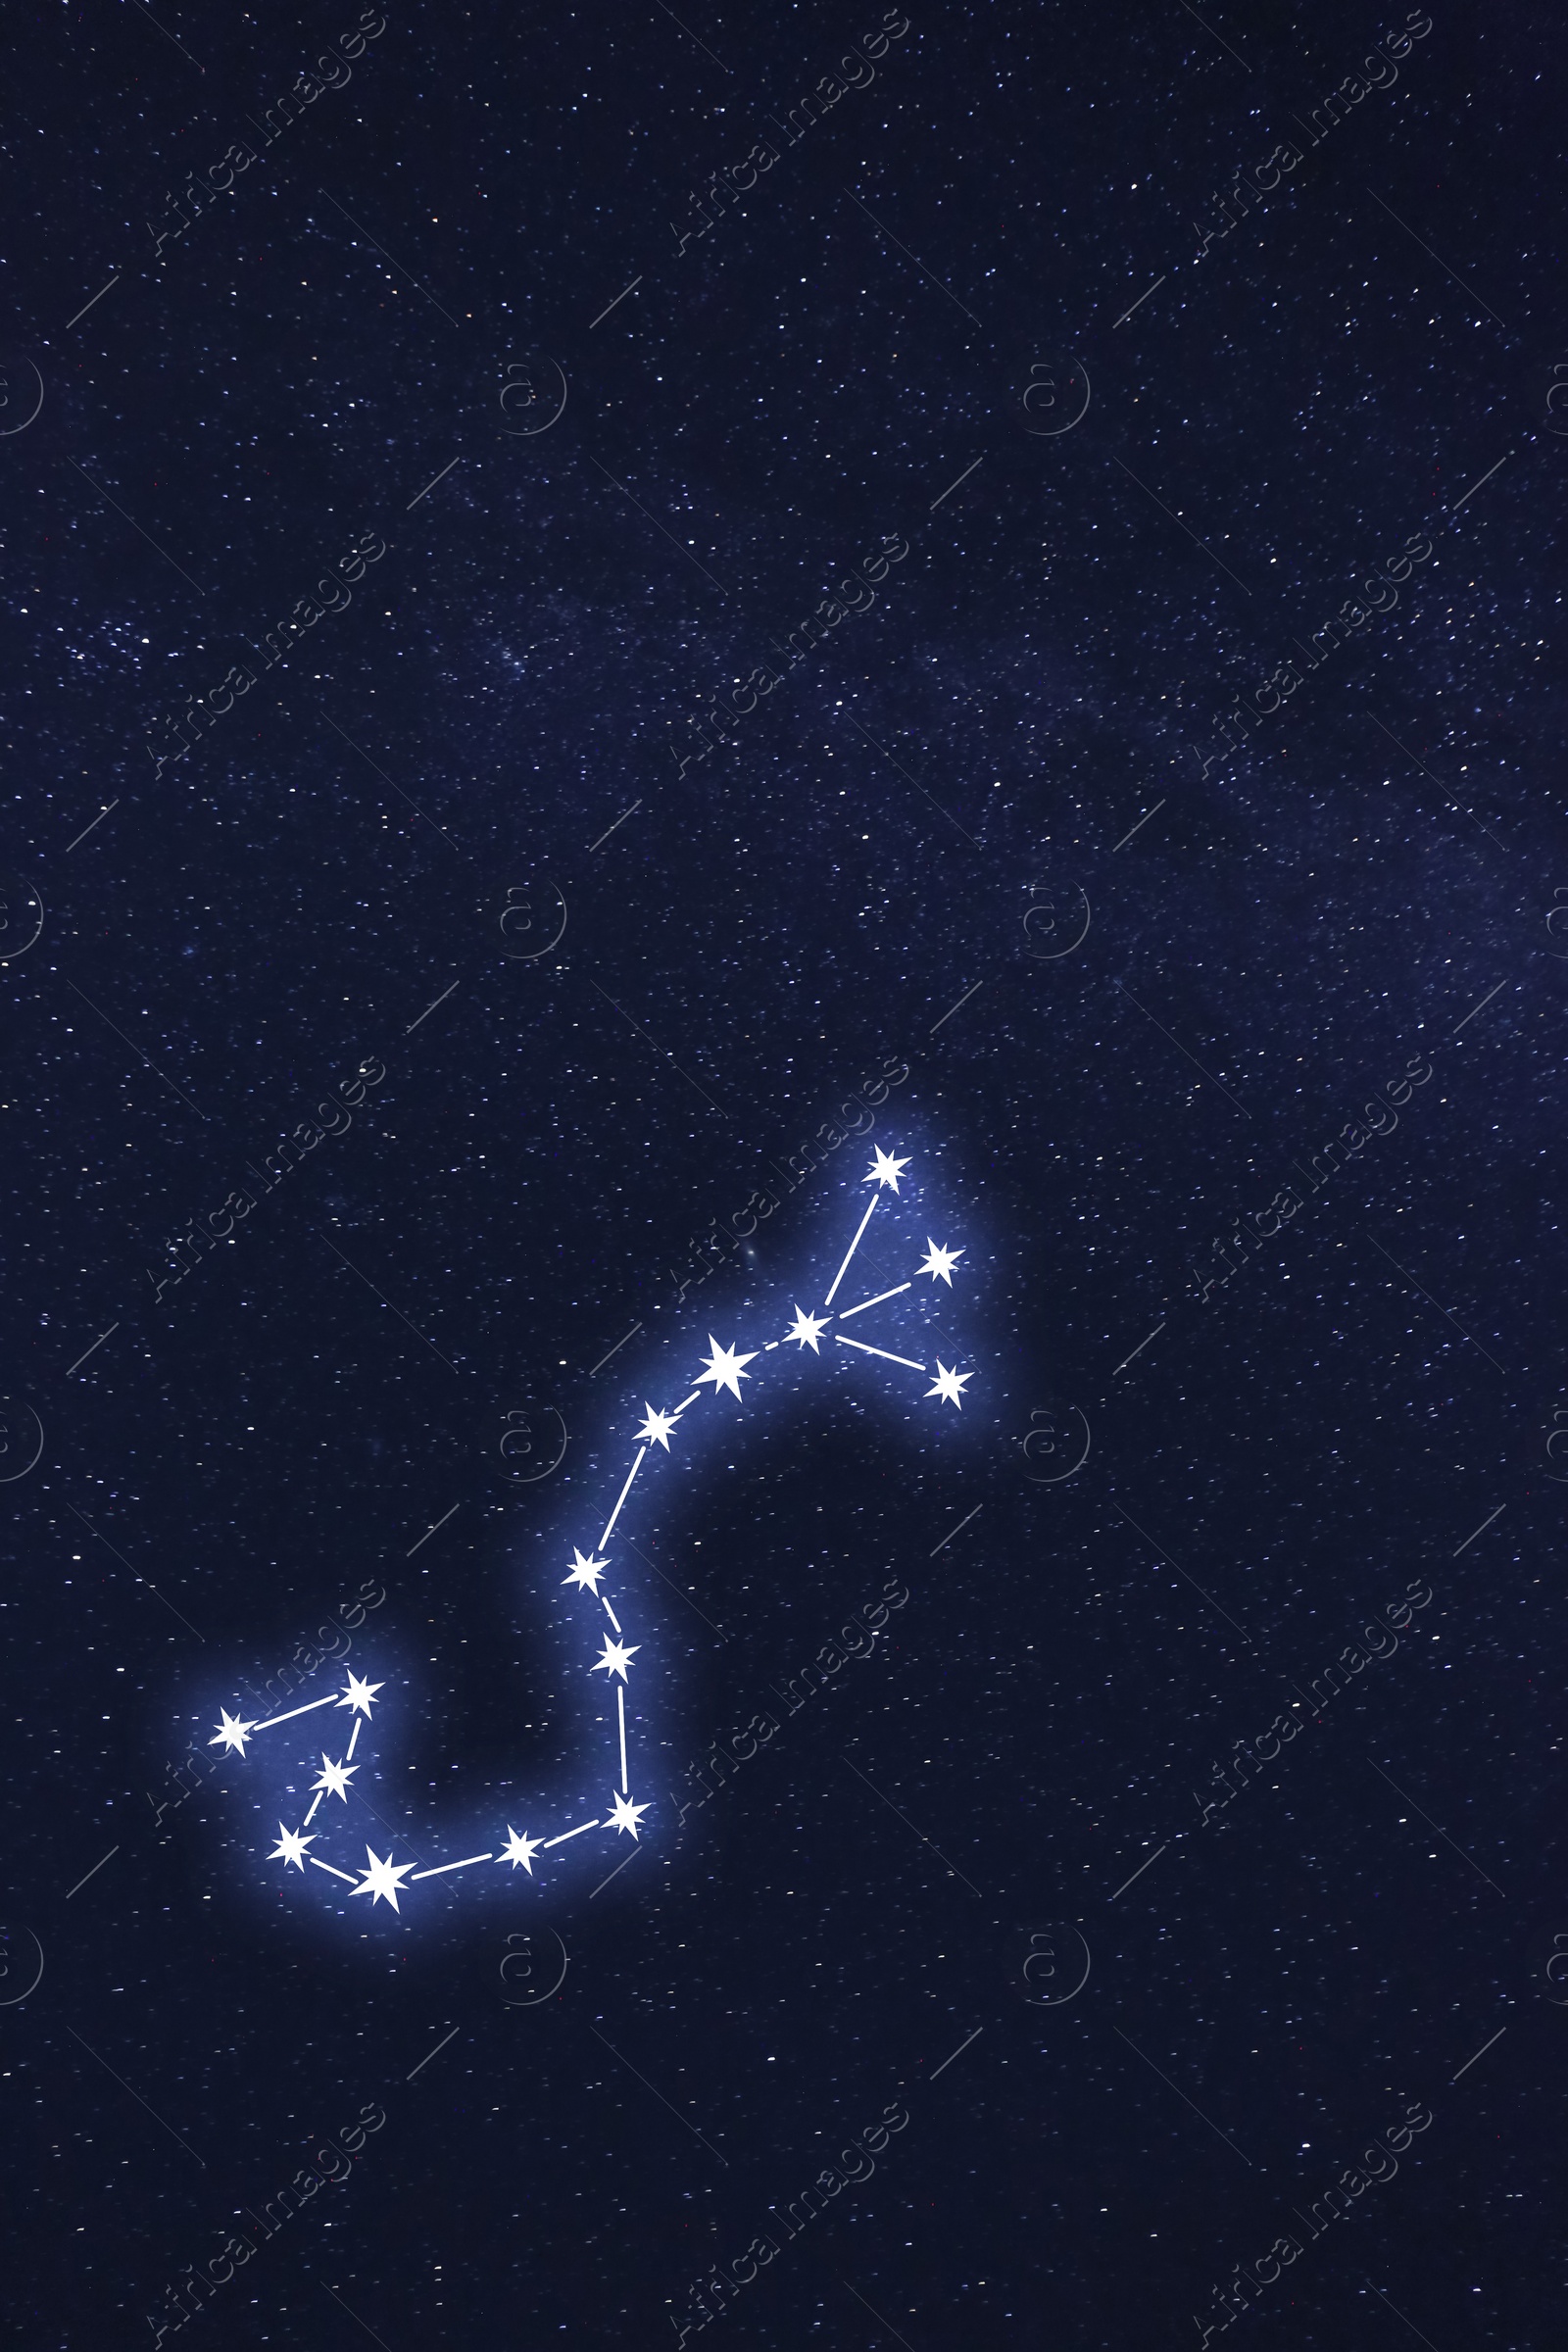 Image of Scorpius (Scorpion) constellation. Stick figure pattern in starry night sky